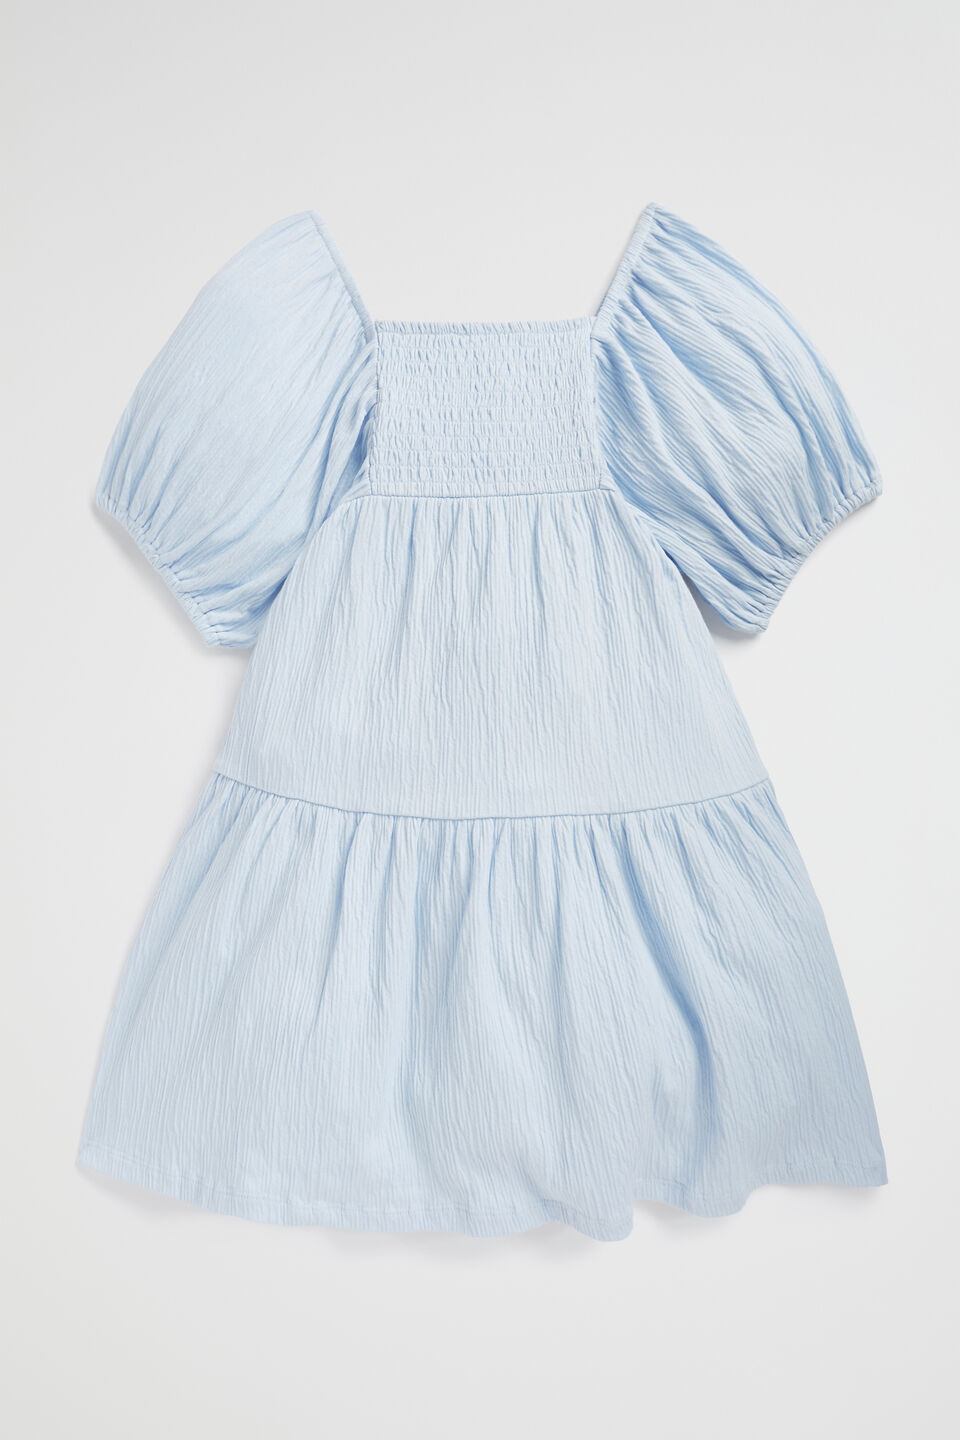 Textured Cotton Dress  Baby Blue